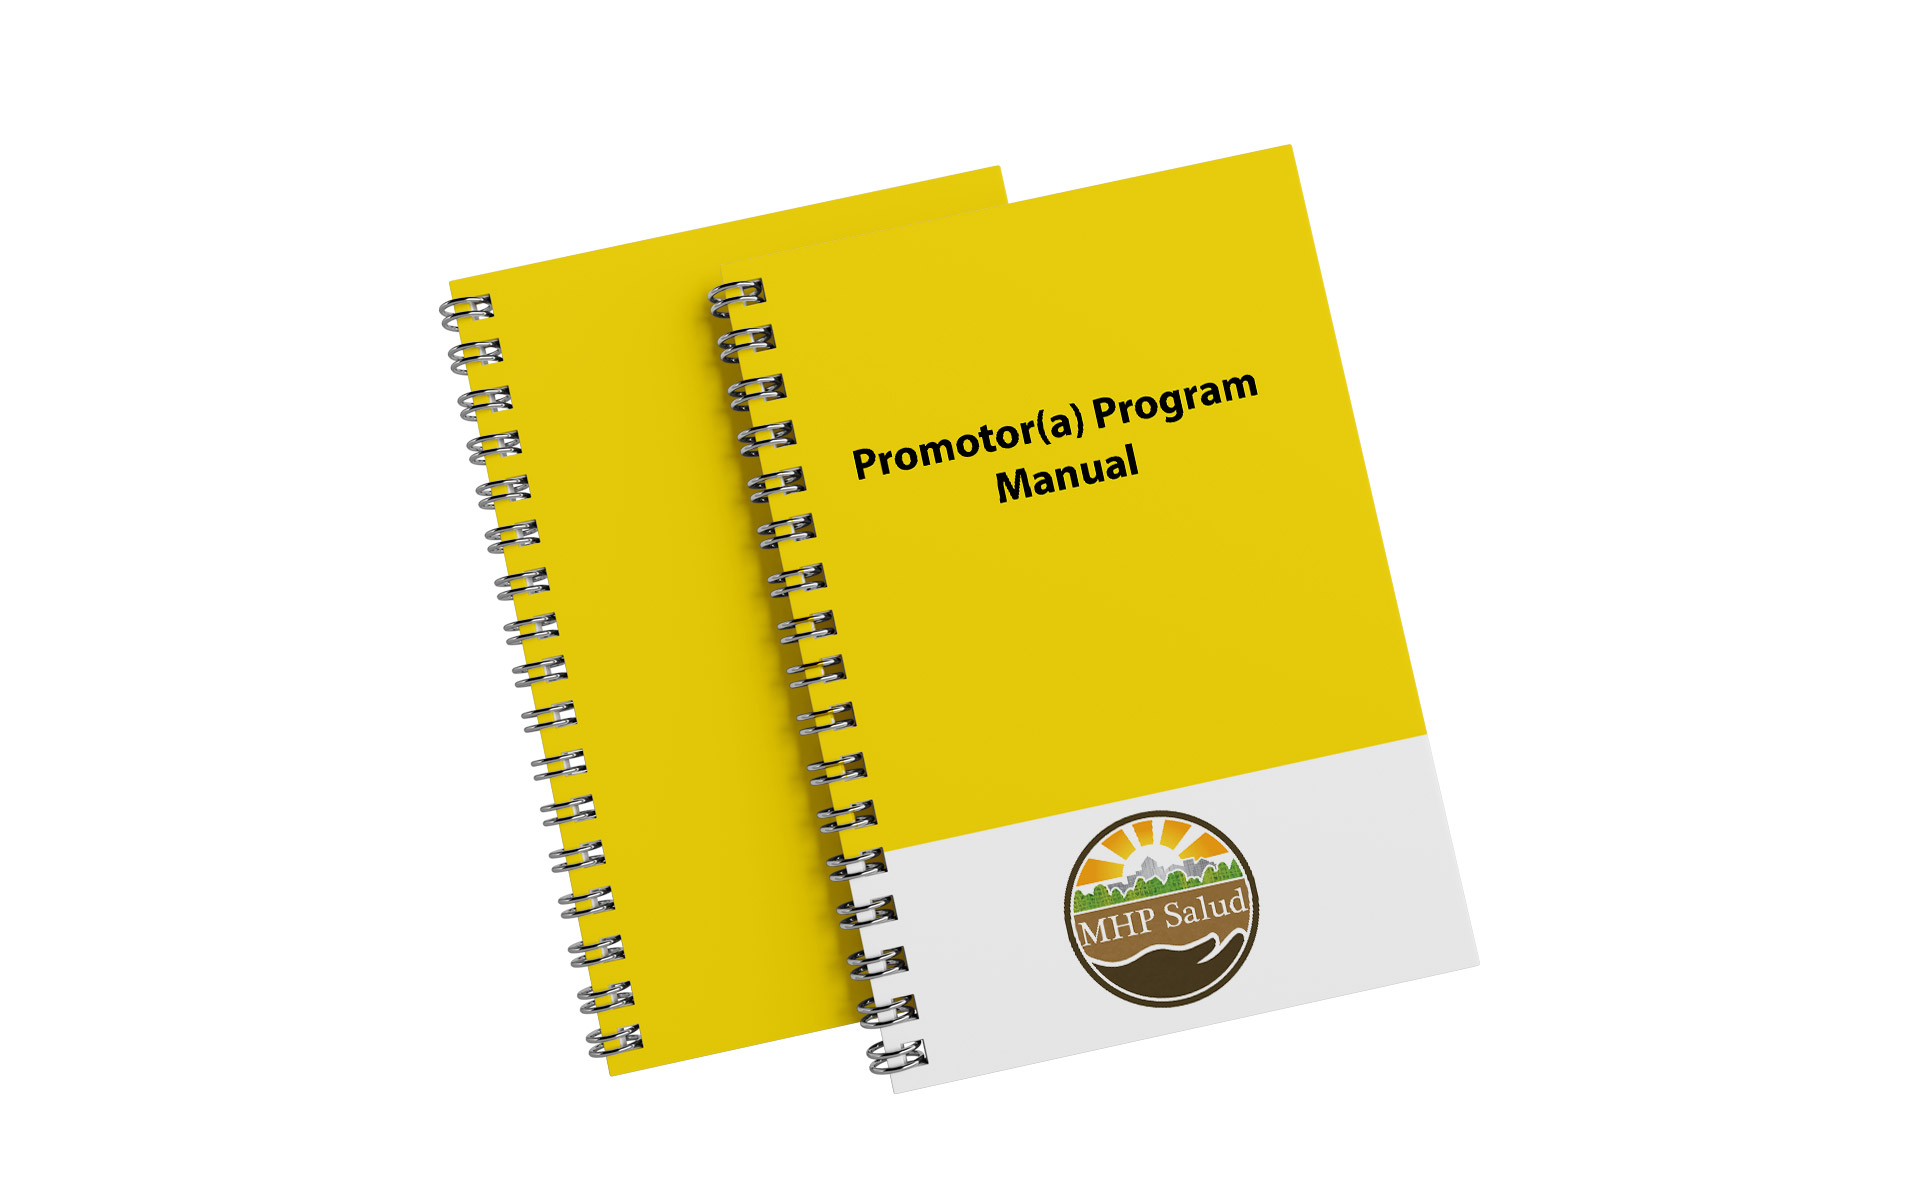 Promotor(a) Program Manual